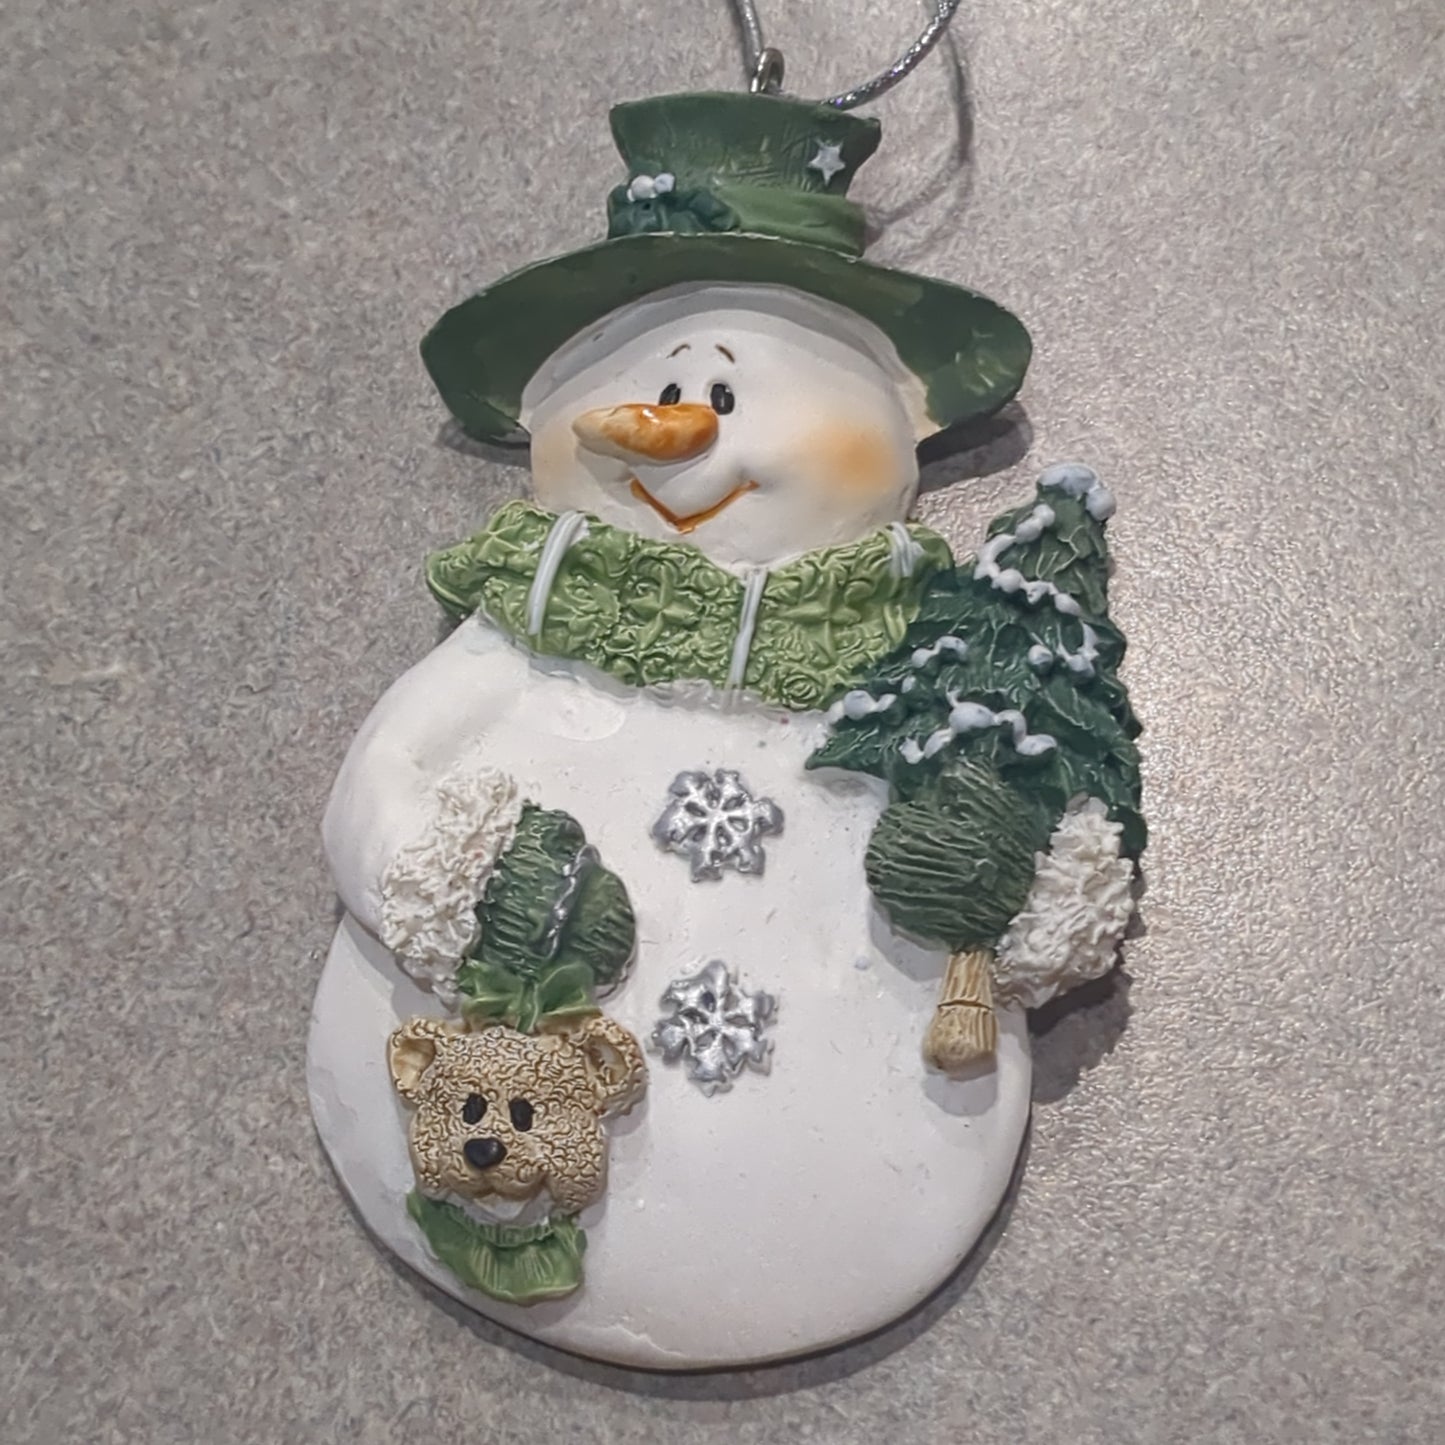 Polycrylic snowman ornament with tree and teddy bear